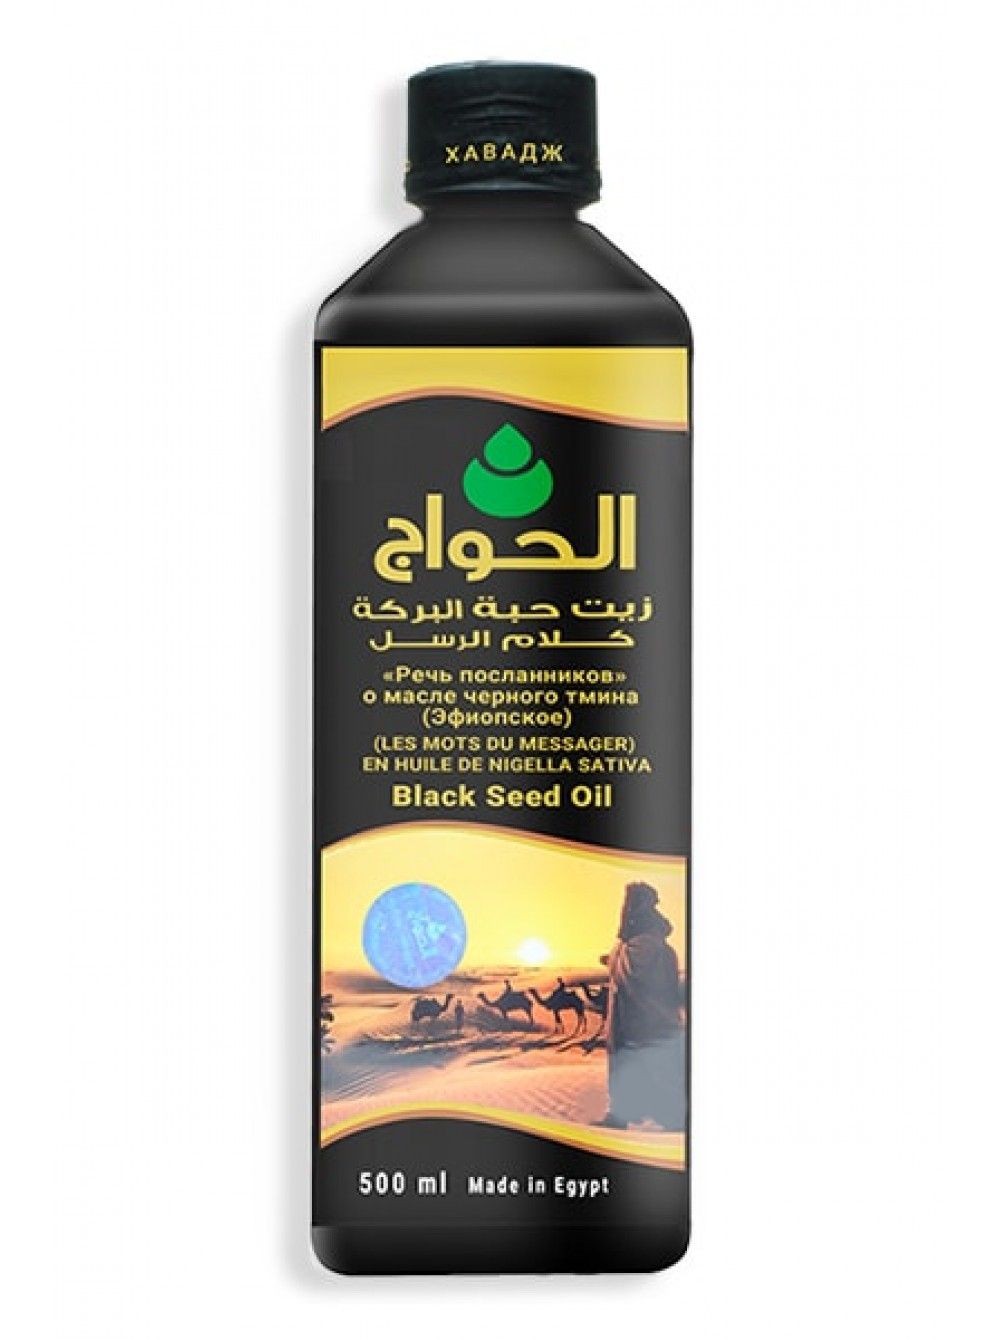 Египетское масло тмина. El-Hawag масло черного тмина Эфиопское. Тминное масло египетское. Масло черного тмина из Египта. Масло черного тмина Сирия.